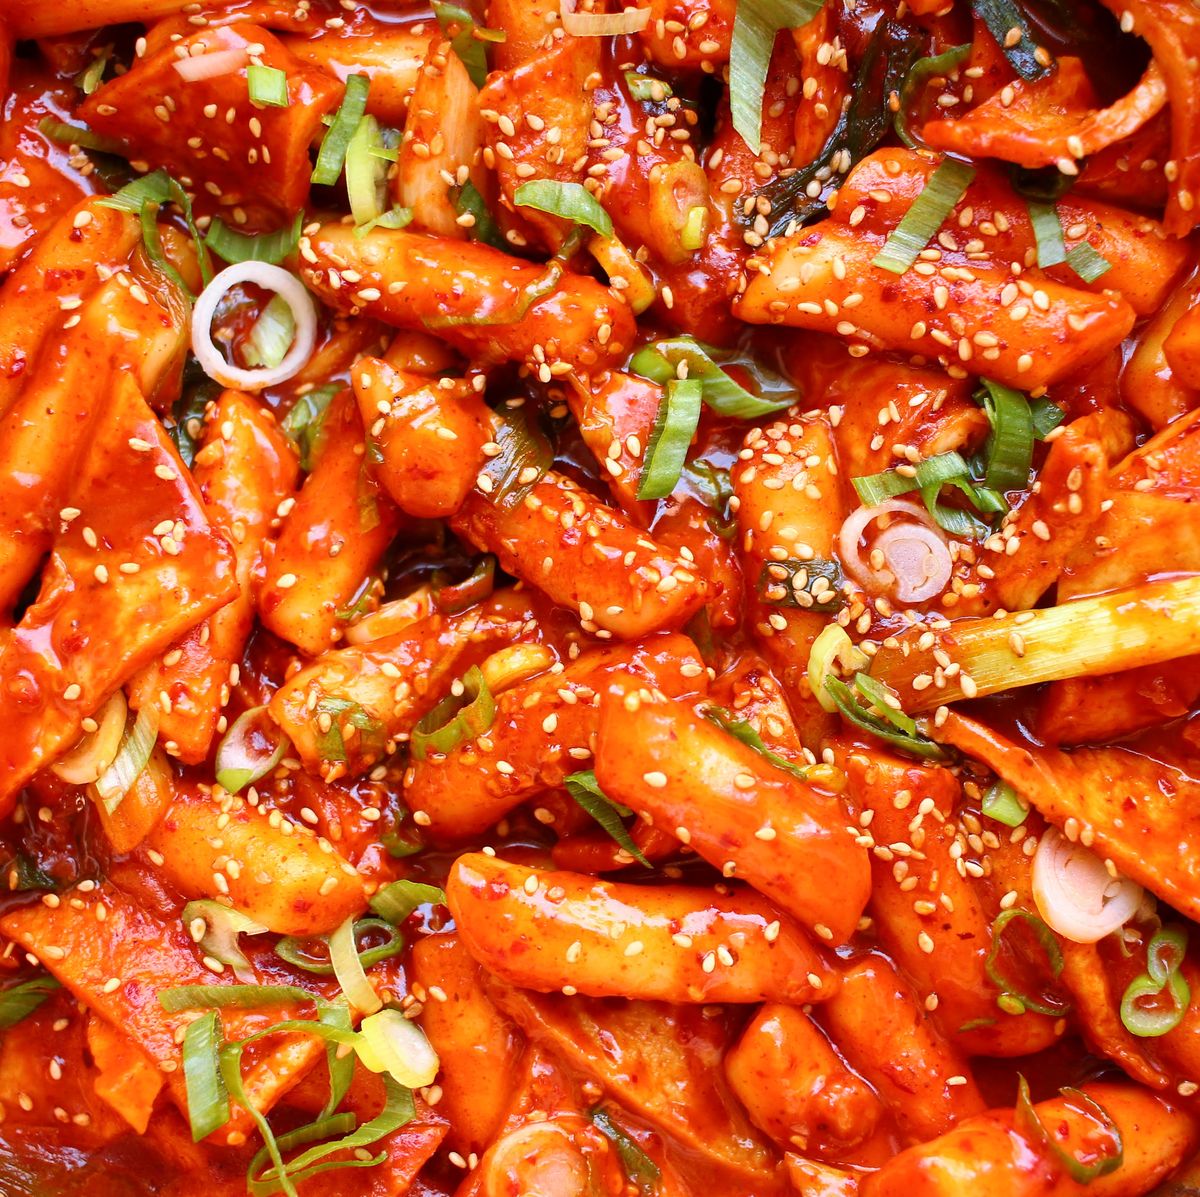 Best Tteokbokki Recipe - How To Make Spicy Korean Rice Cakes